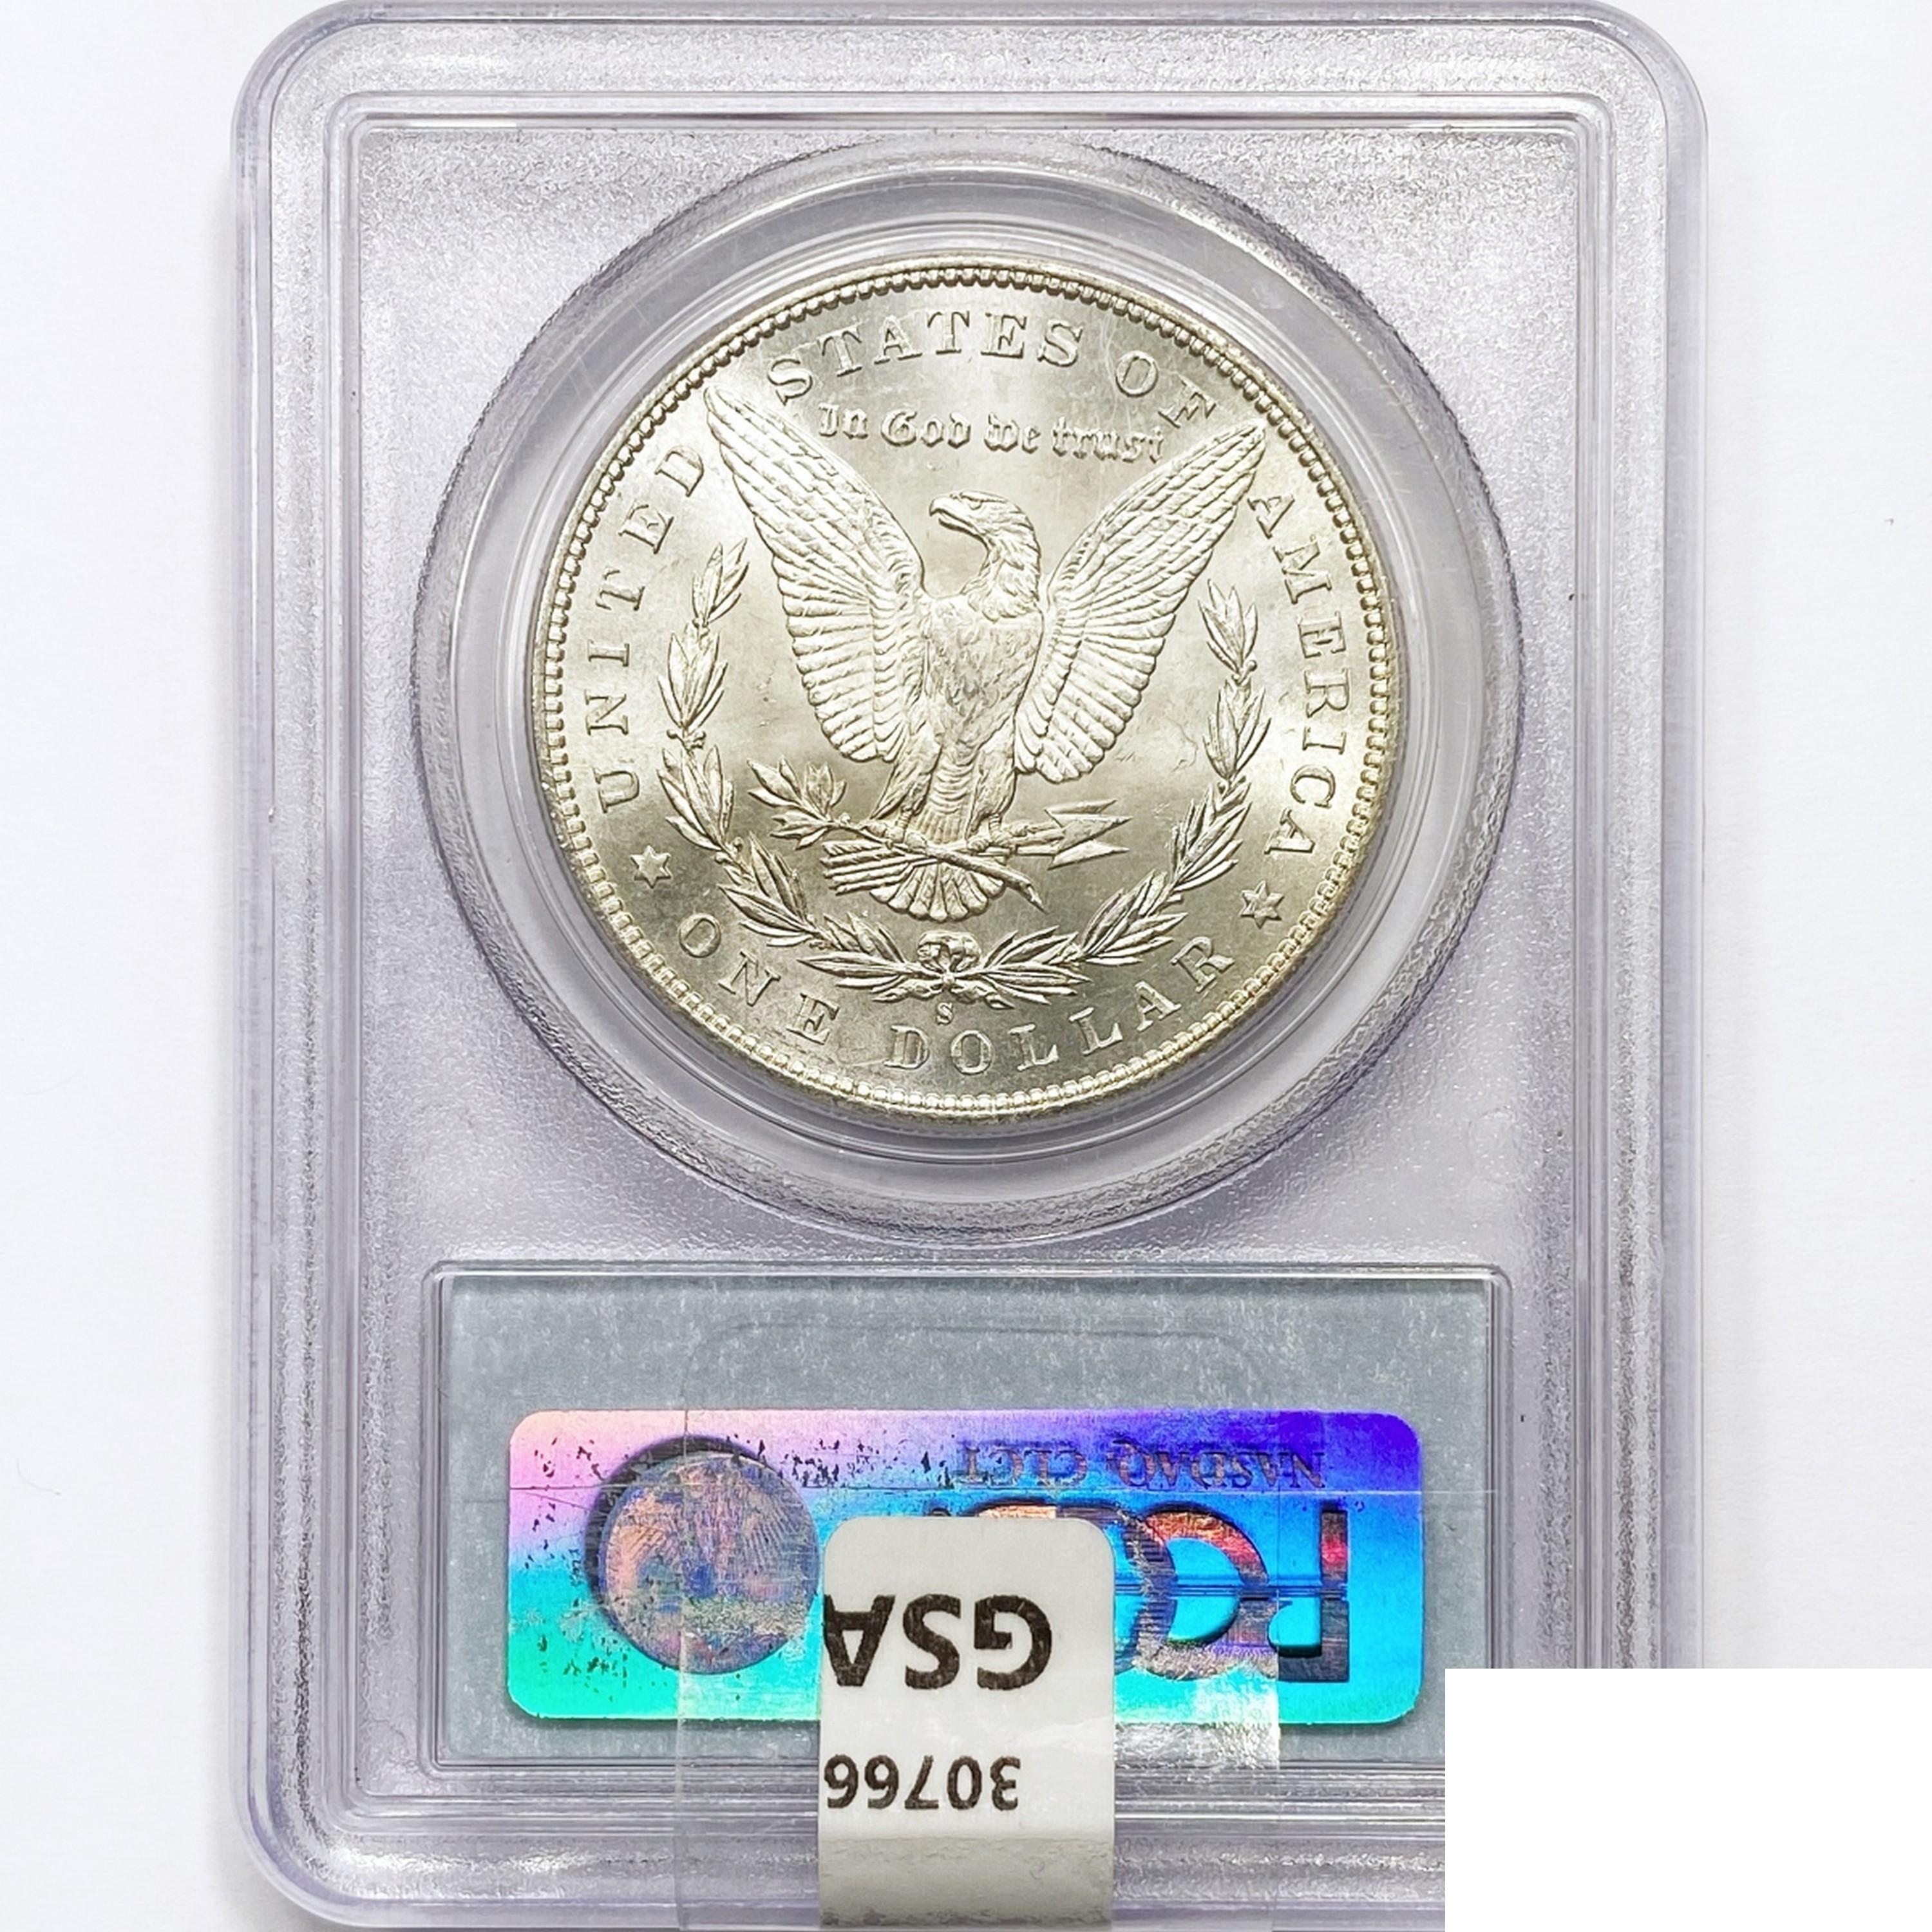 1897-S Morgan Silver Dollar PCGS MS63